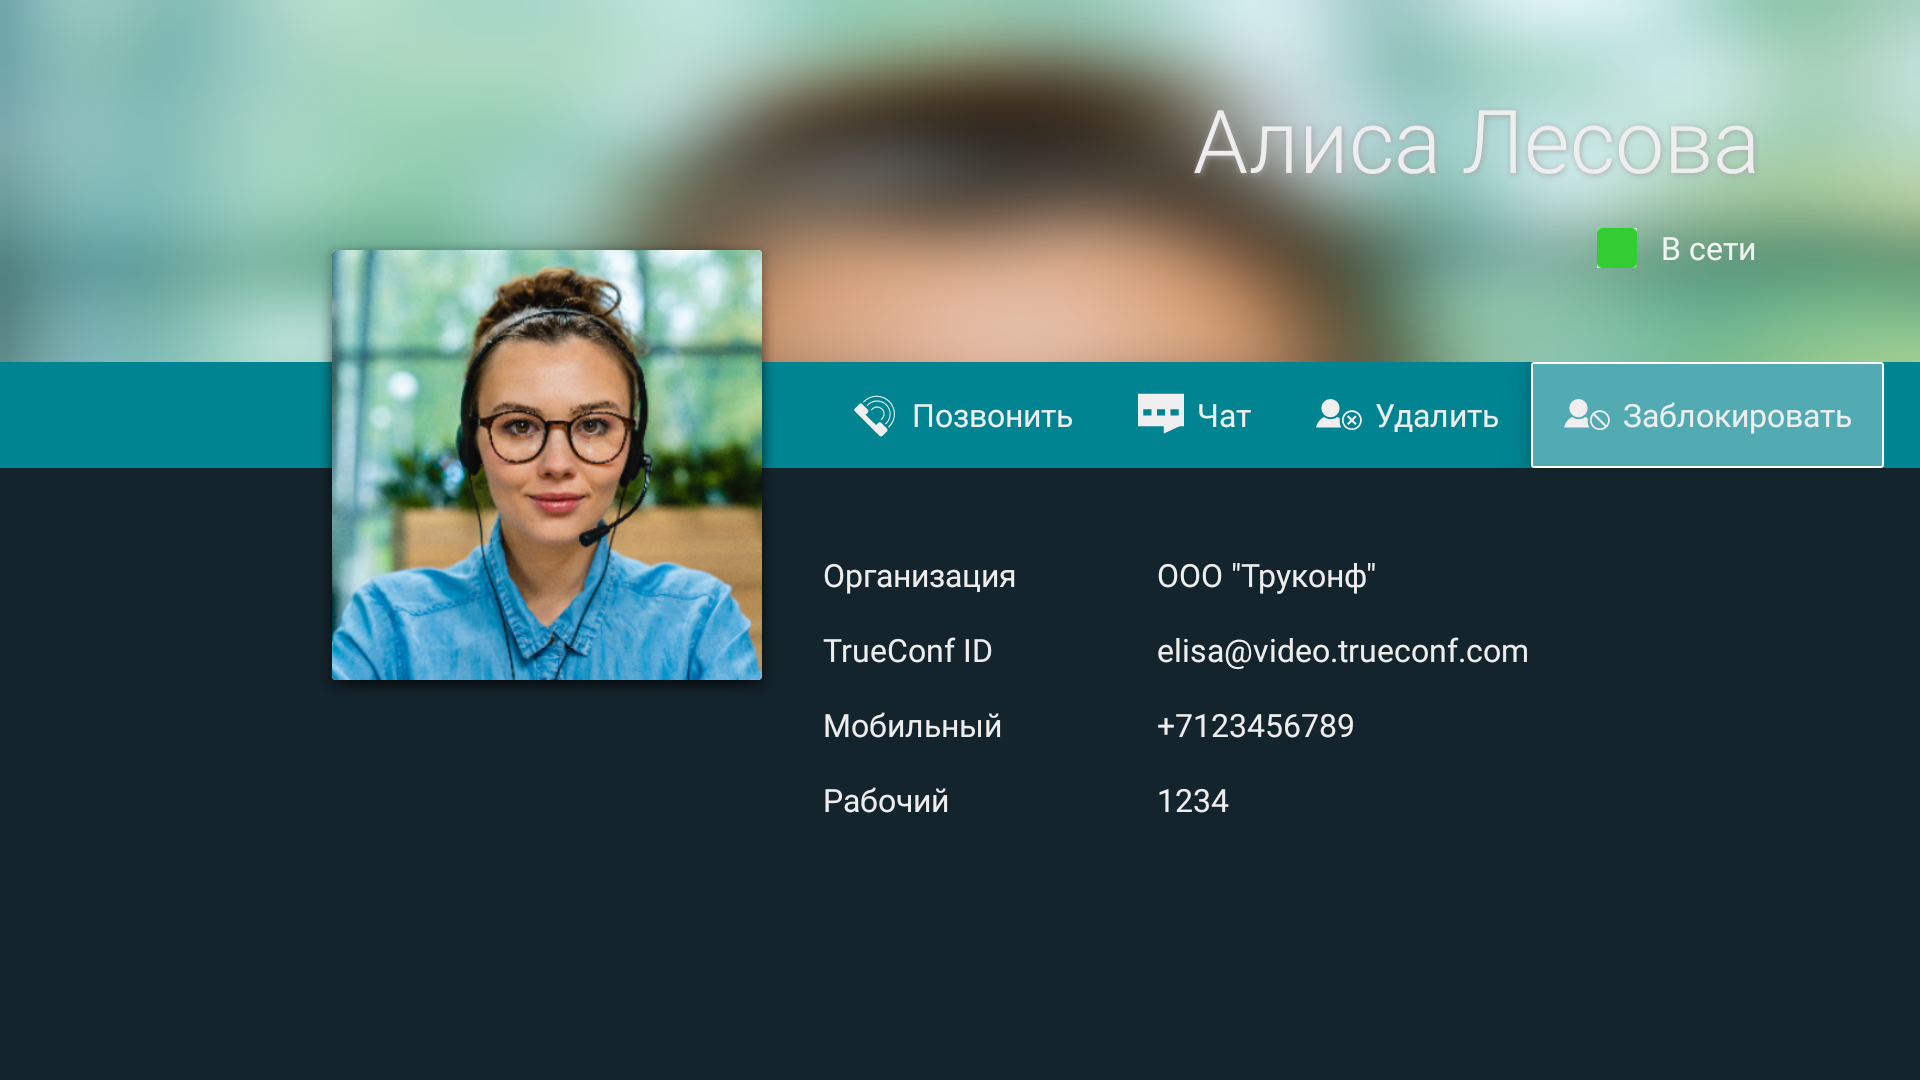 /client-android-tv/media/block_contact/ru.png